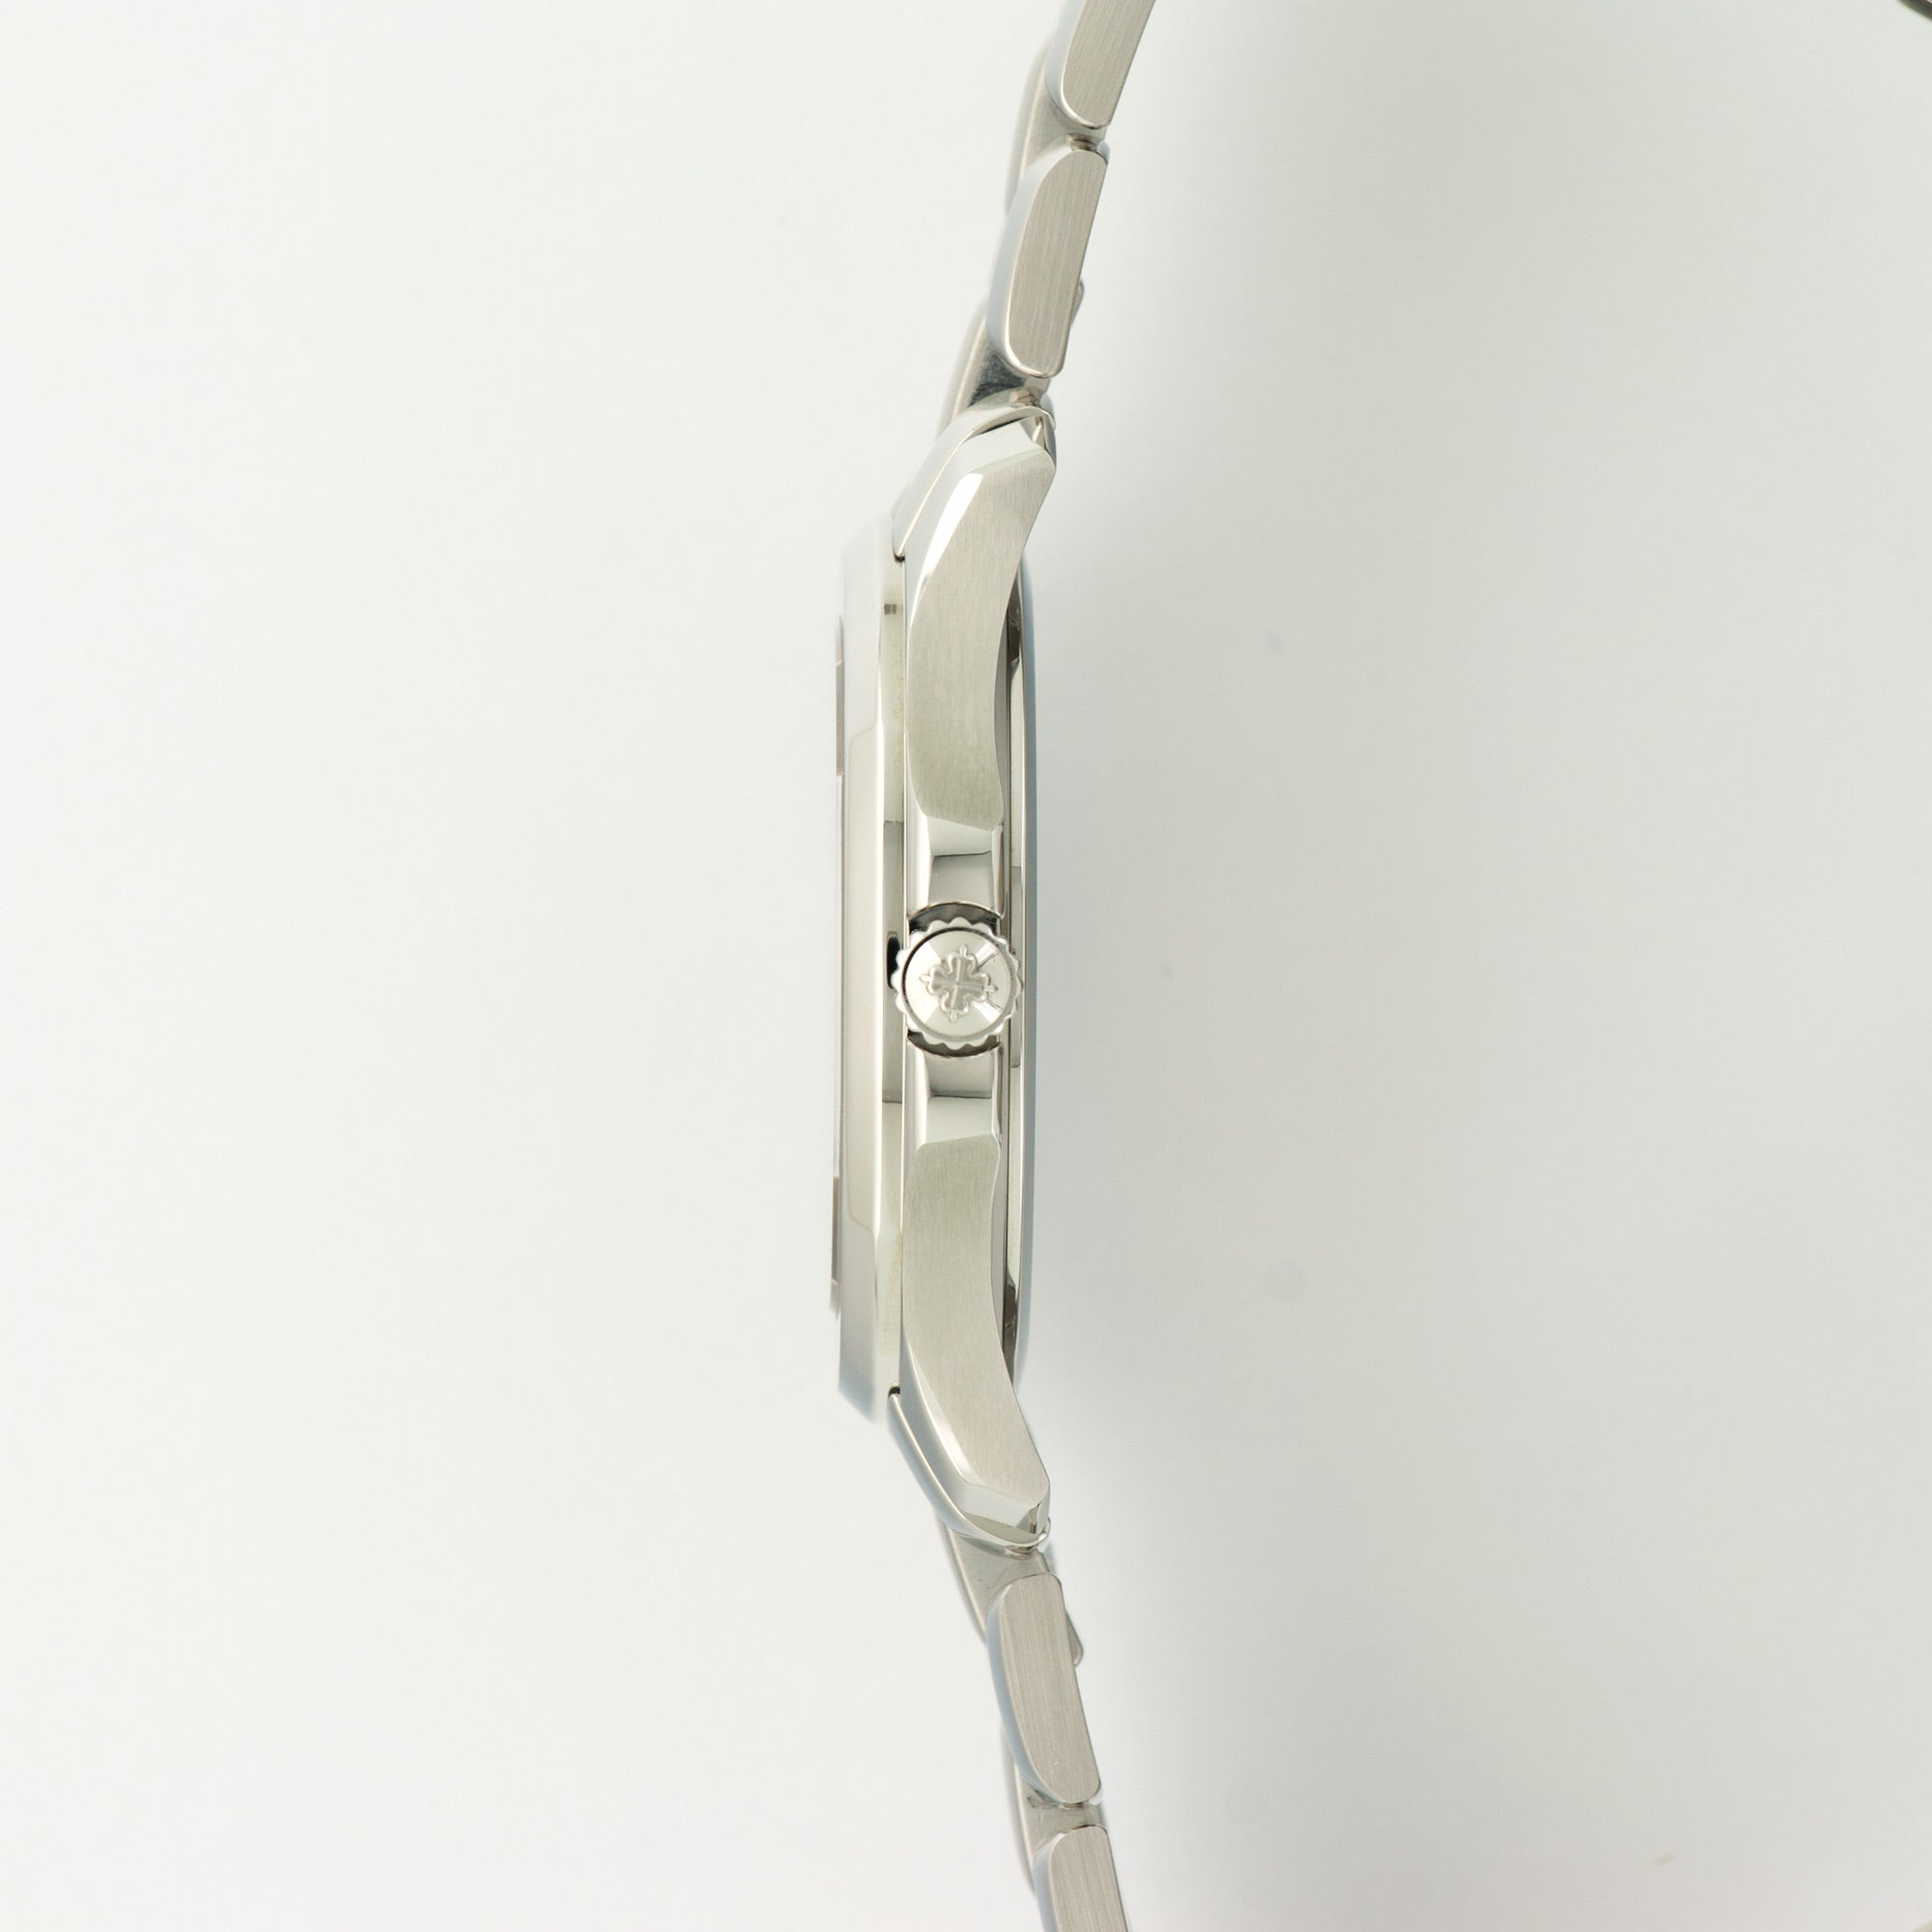 Patek Philippe - Patek Philippe Stainless Steel Aquanaut Watch Ref. 5167 - The Keystone Watches